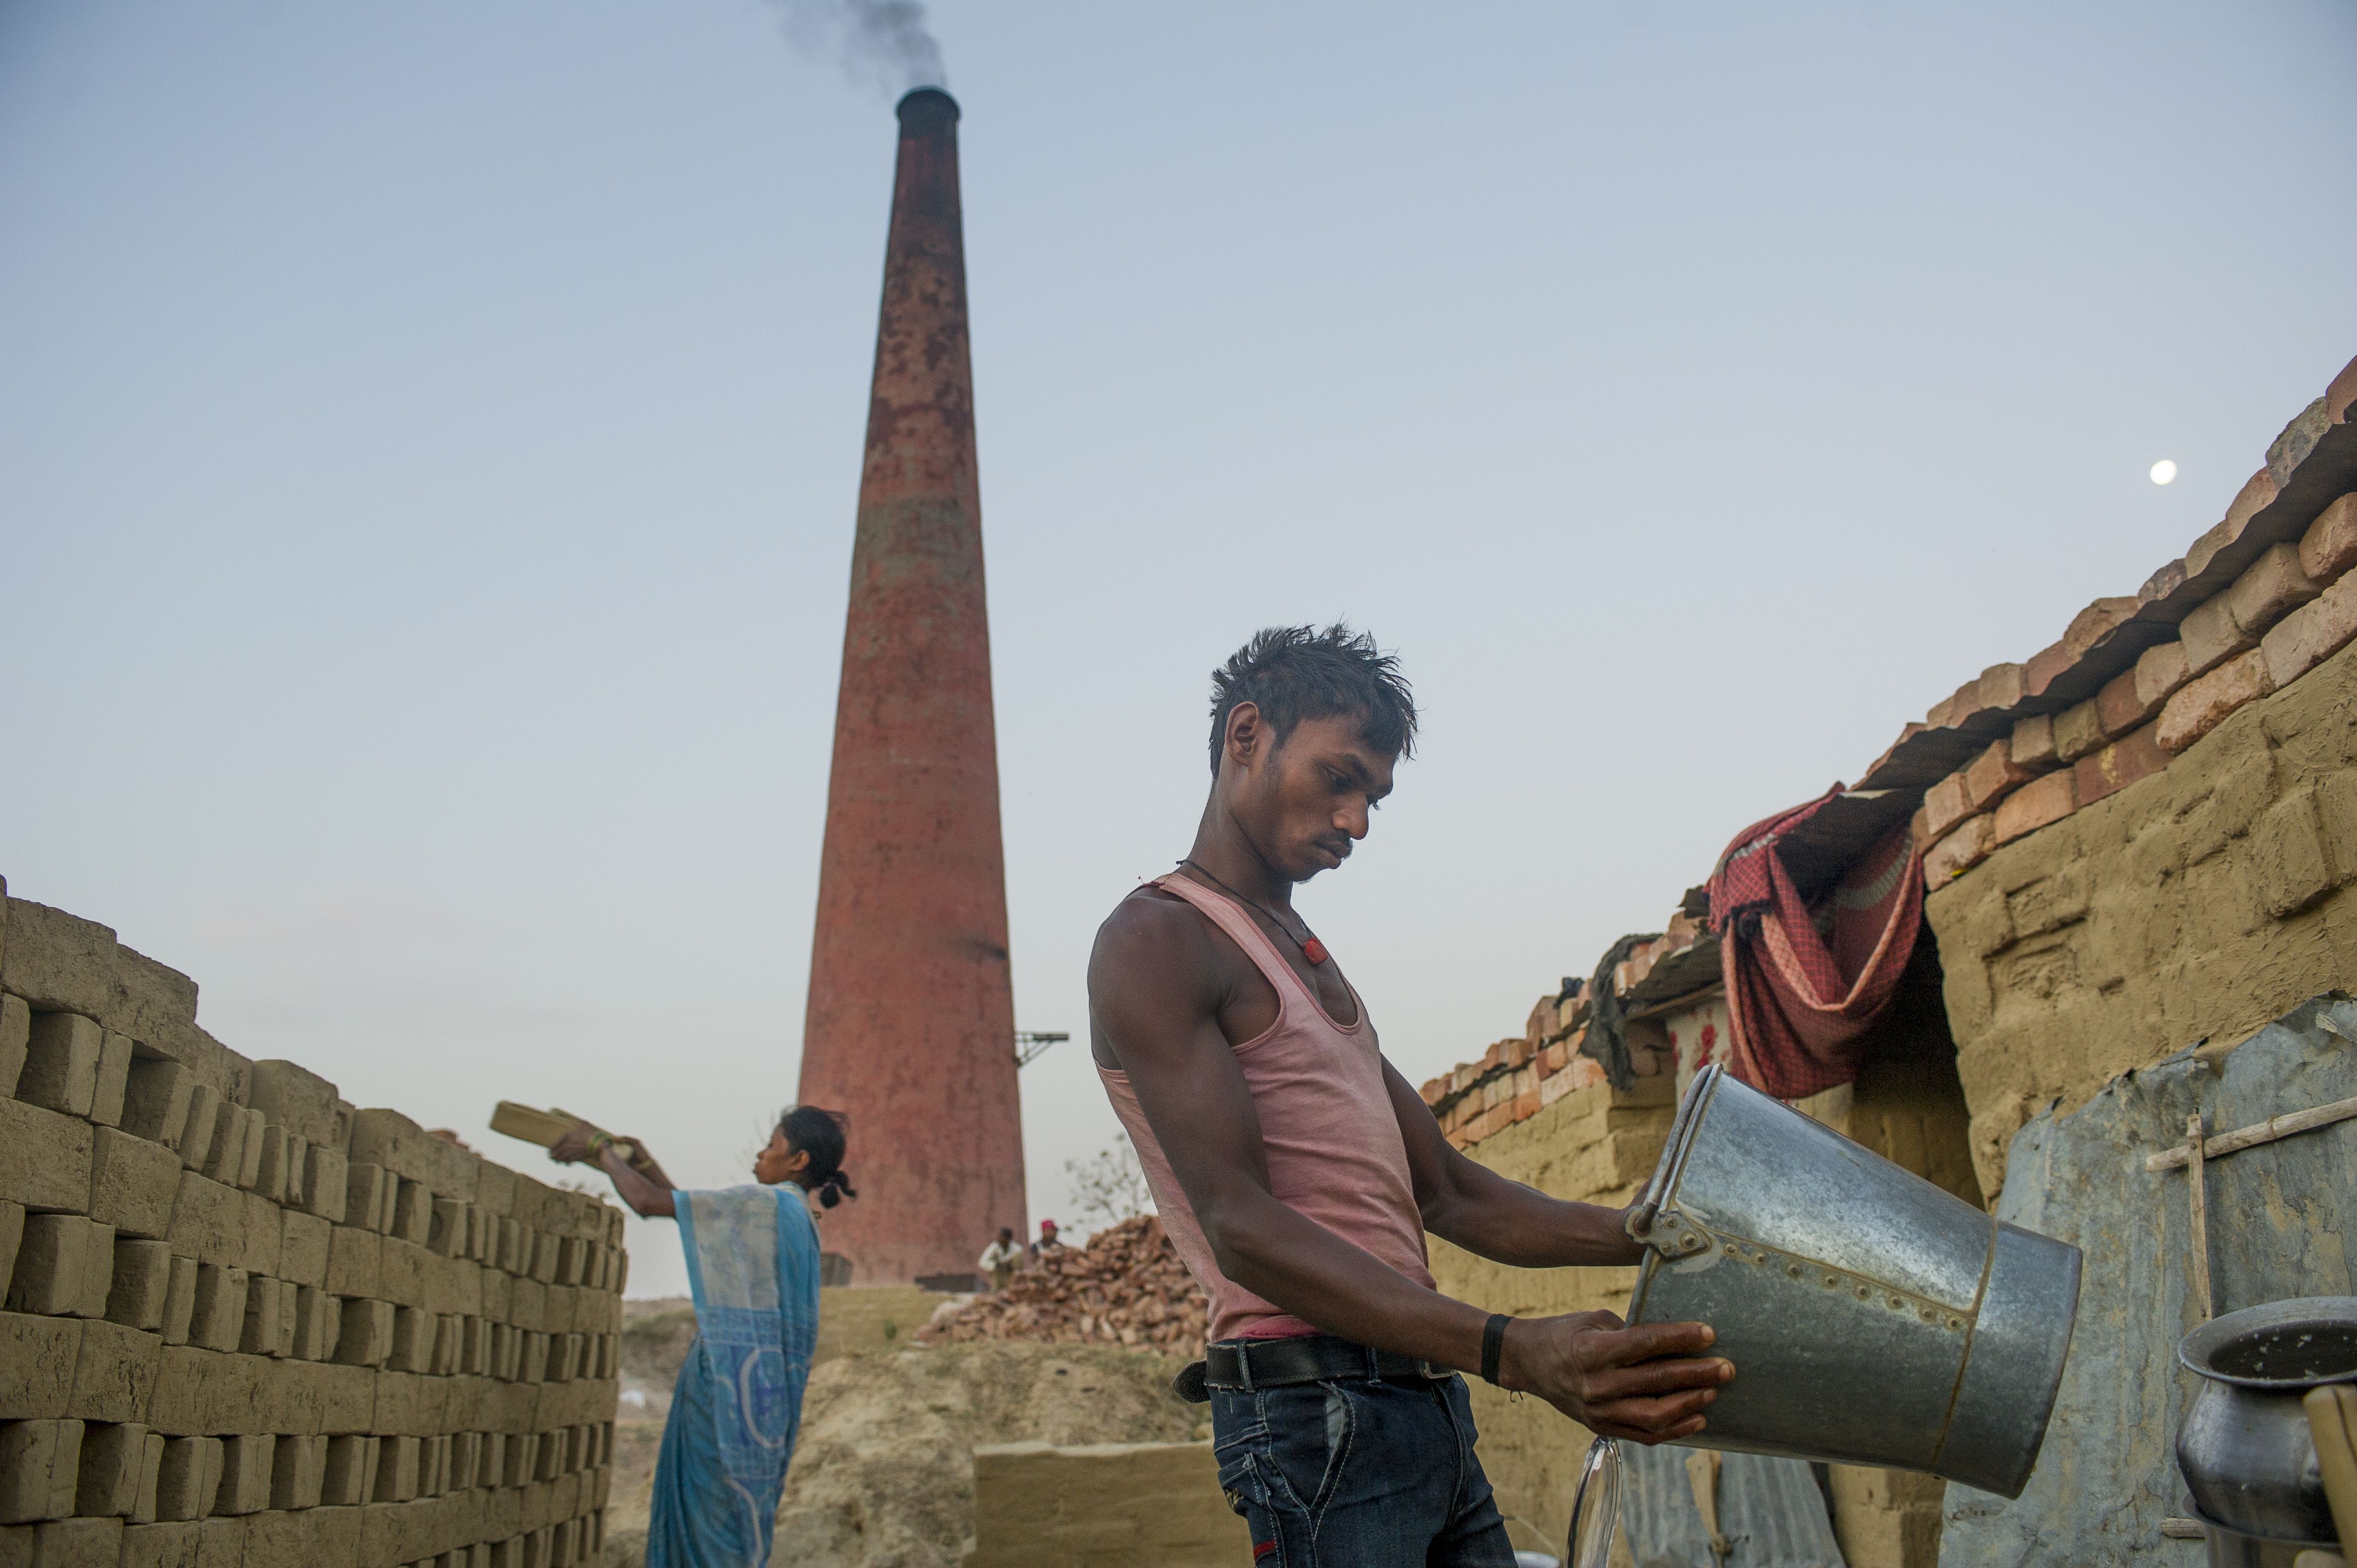 Brick molders begin work at sunrise at a brick kiln in the state of Uttar Pradesh. Image by Ann Hermes. India, 2016